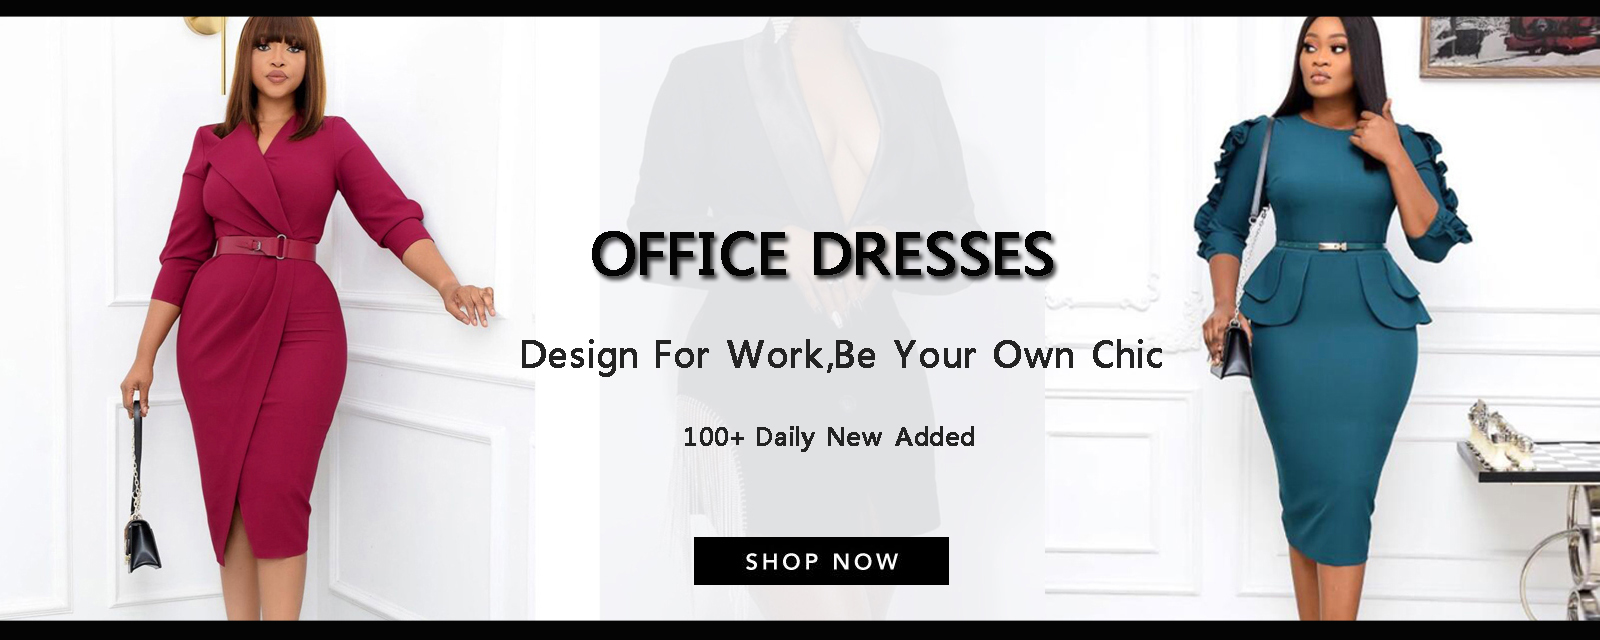 Office Dresses